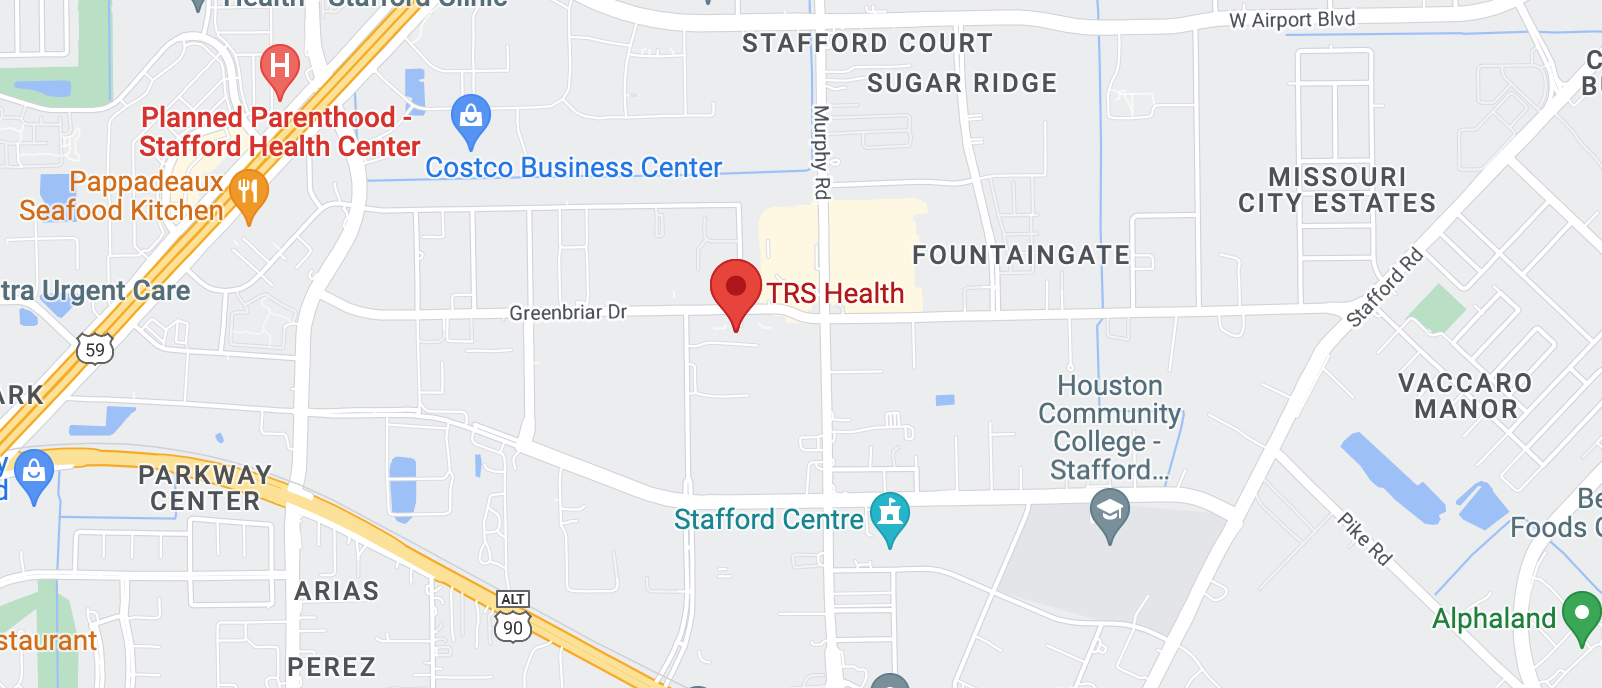 trs-health-google-maps